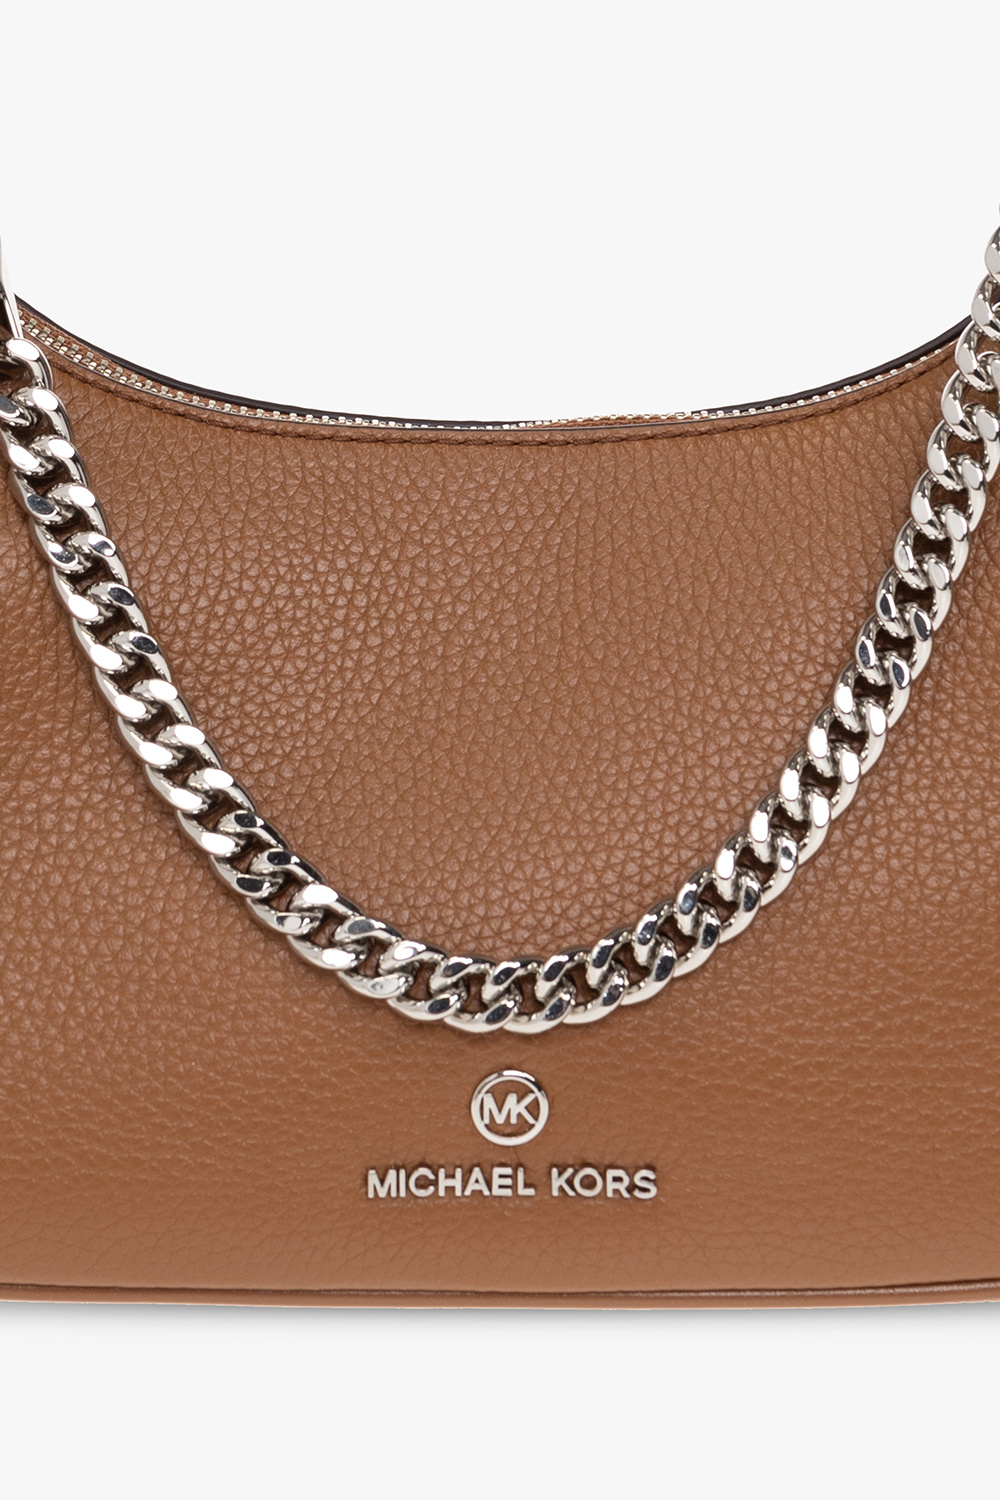 MICHAEL Michael Kors Piper Small Leather Pouchette Bag, Black at